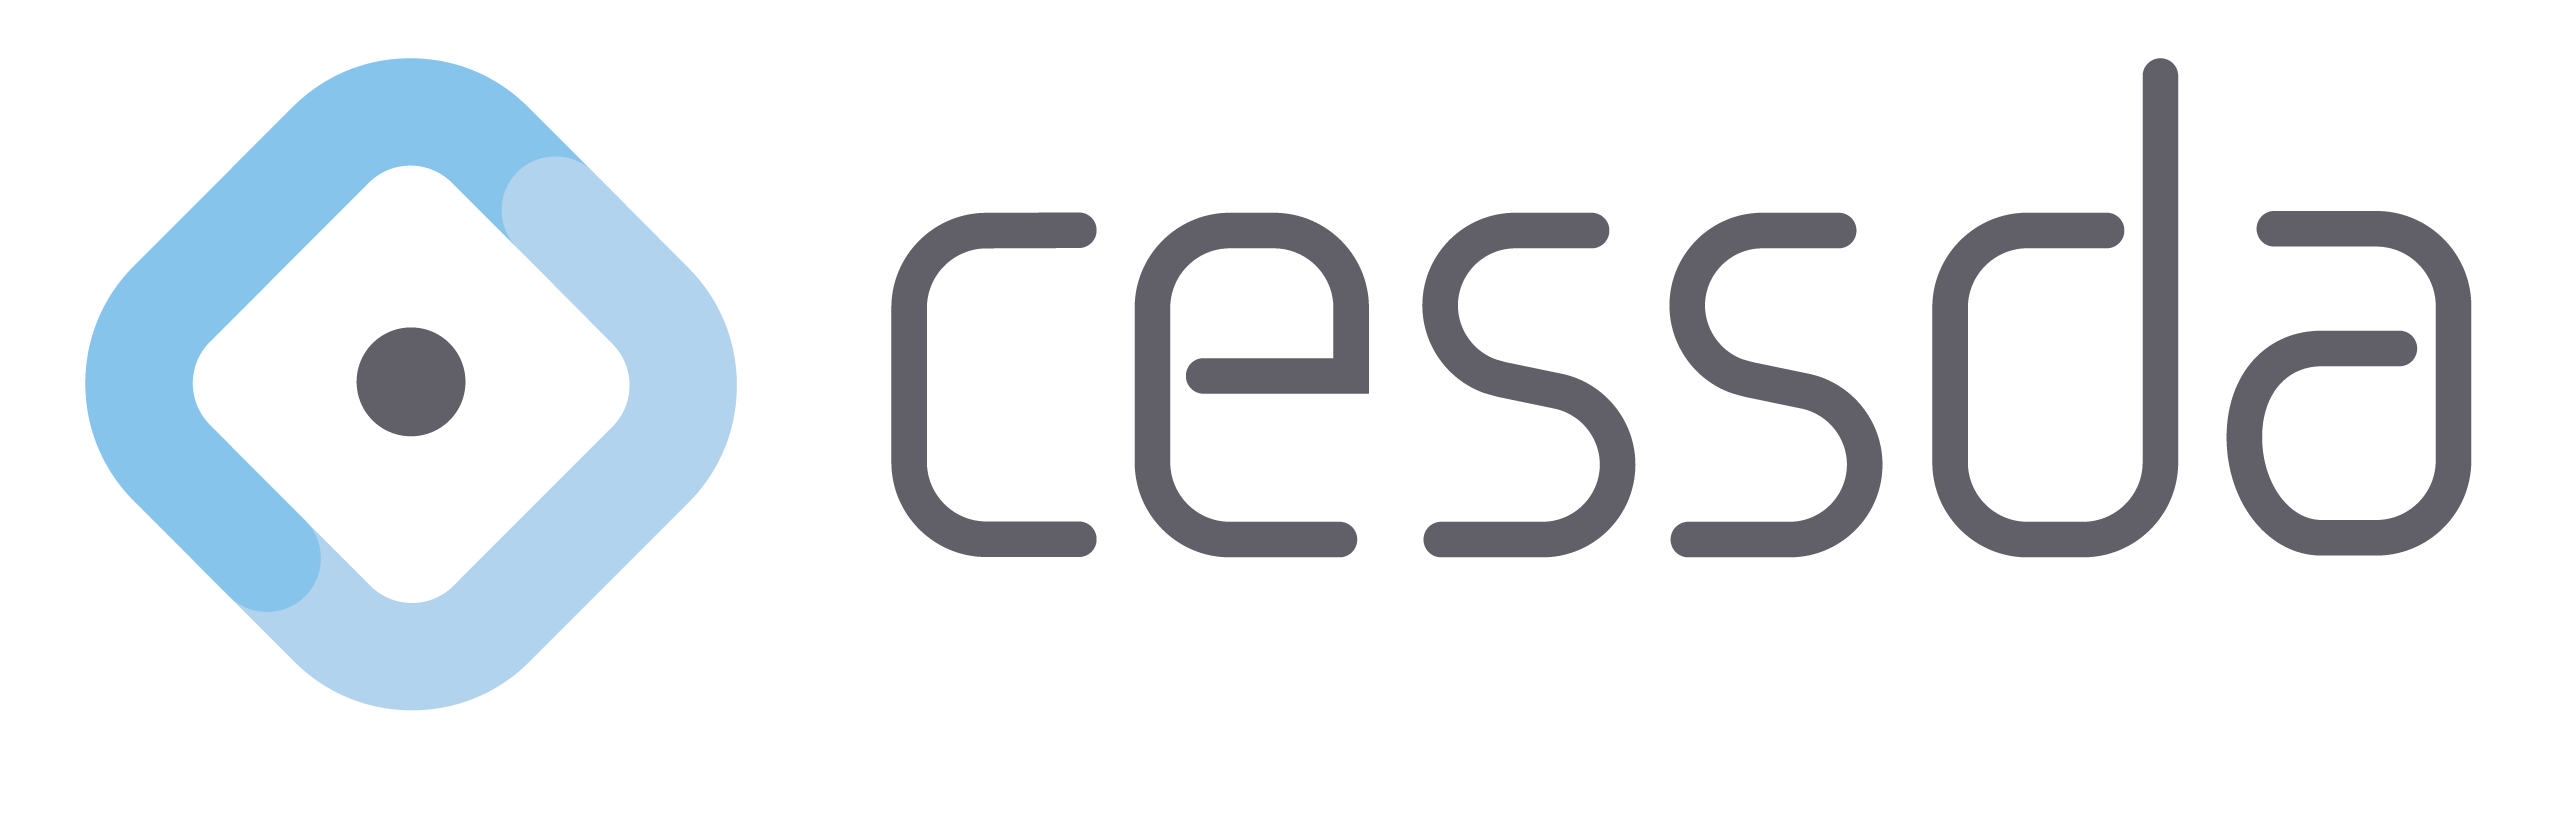 CESSDA logotype